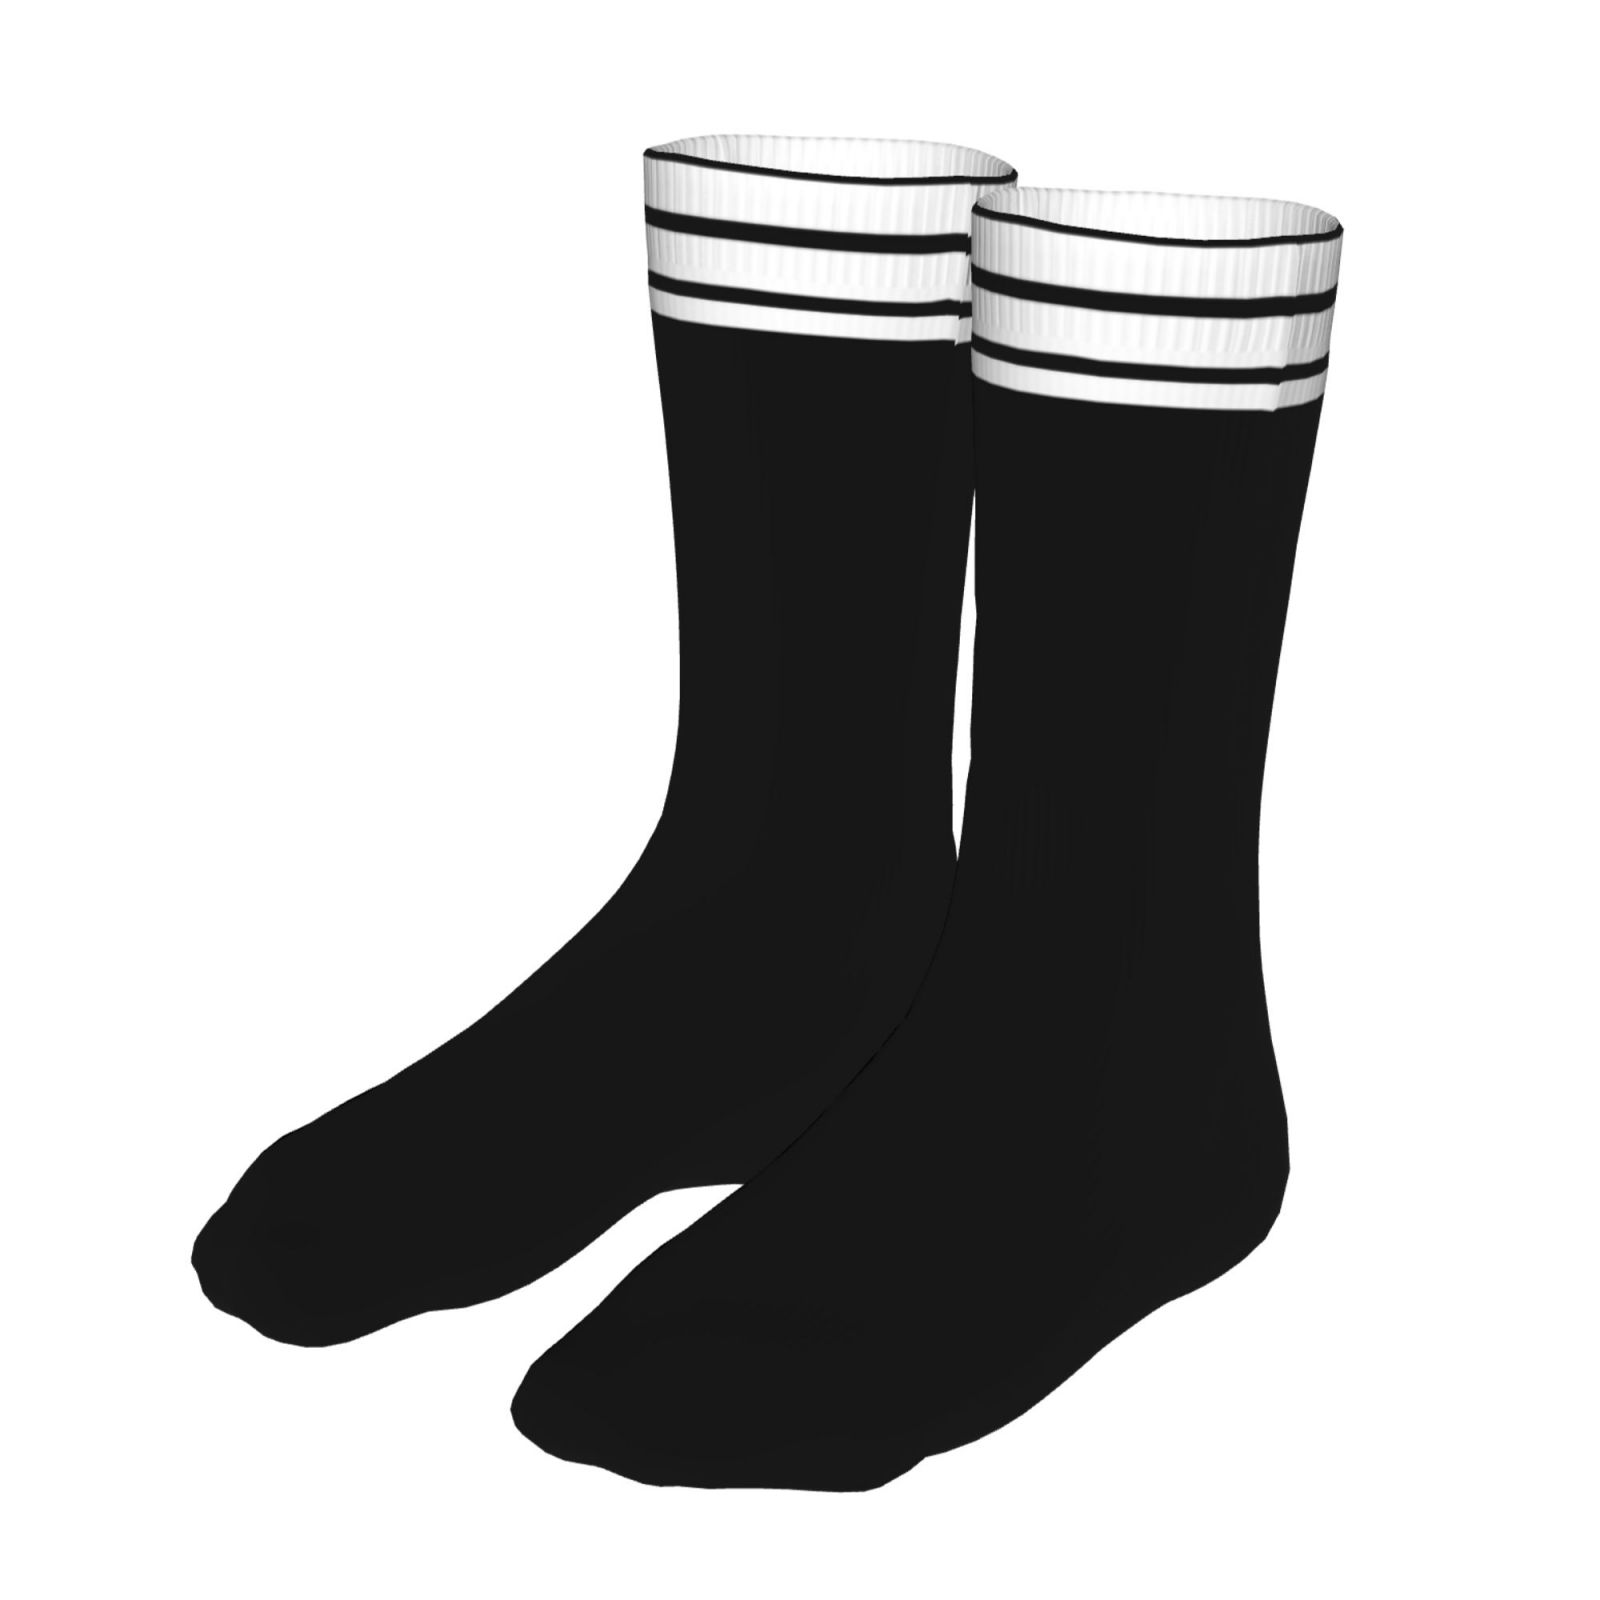 Sockings